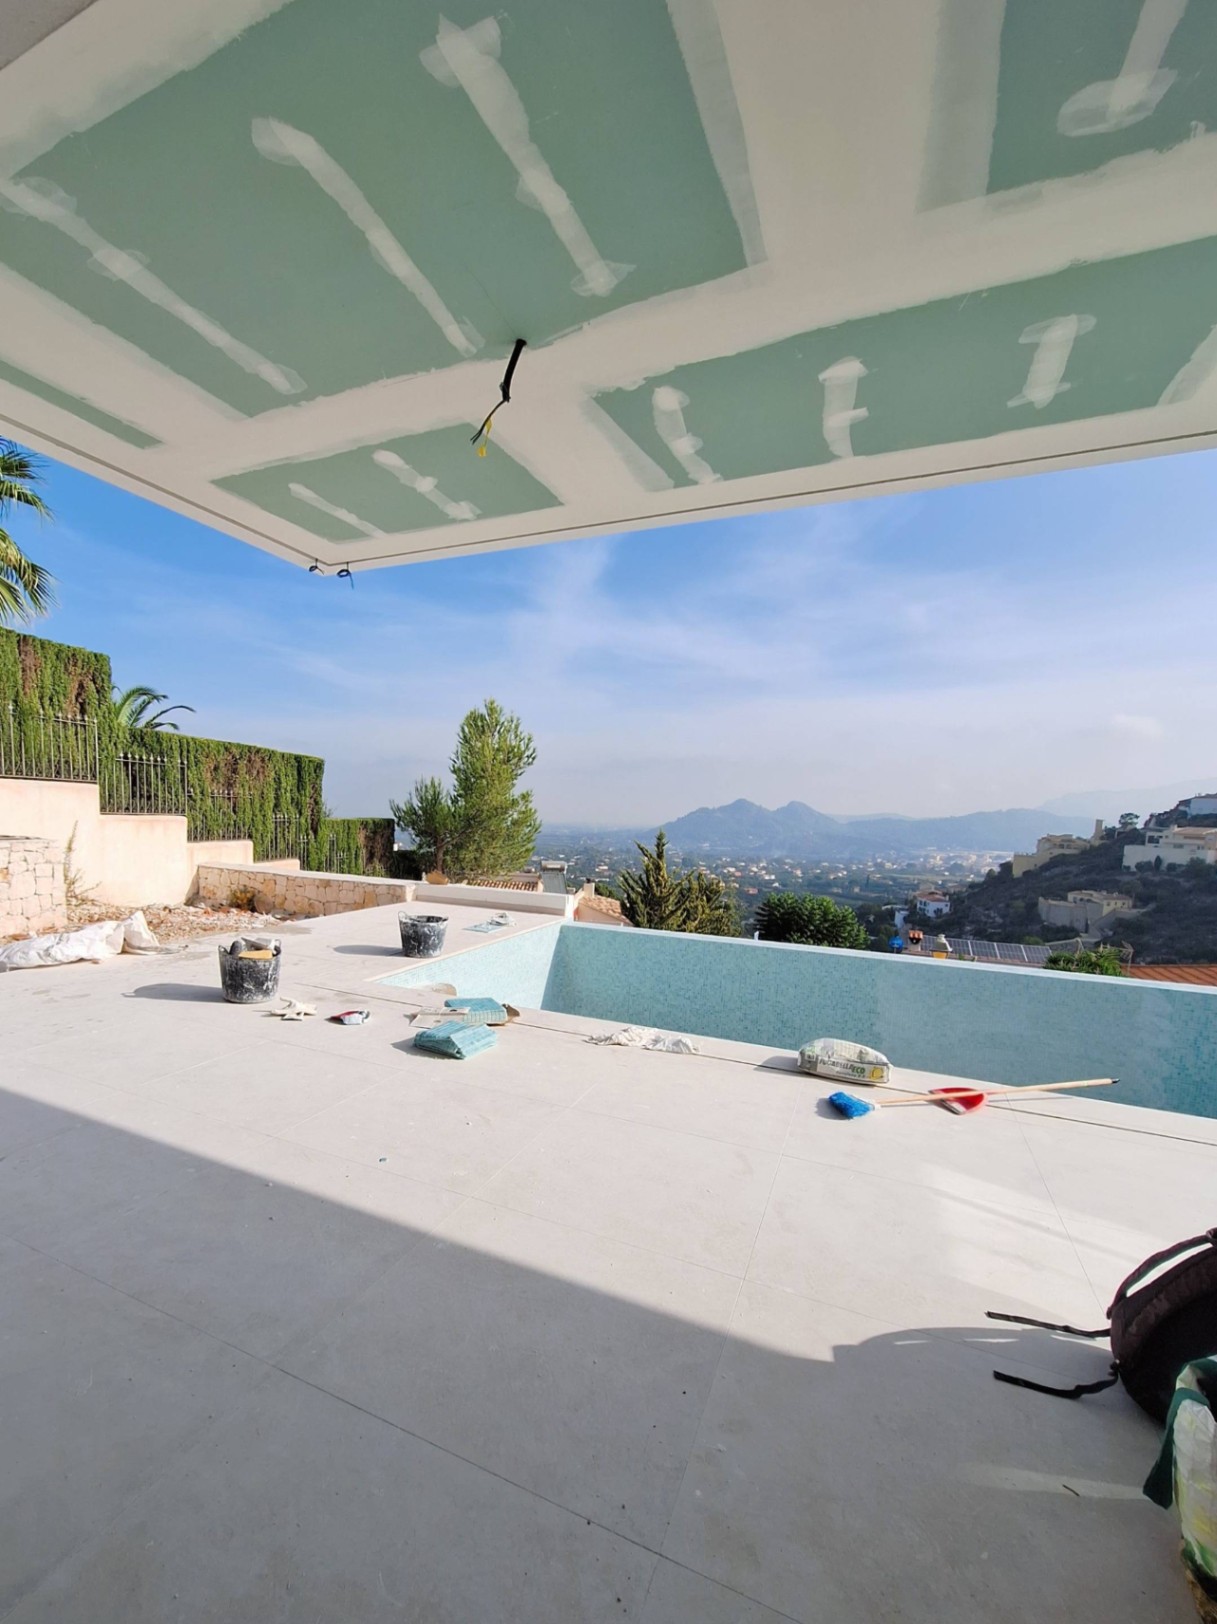 Prachtige villa in Monte Solana/Pedreguer wordt binnenkort voltooid